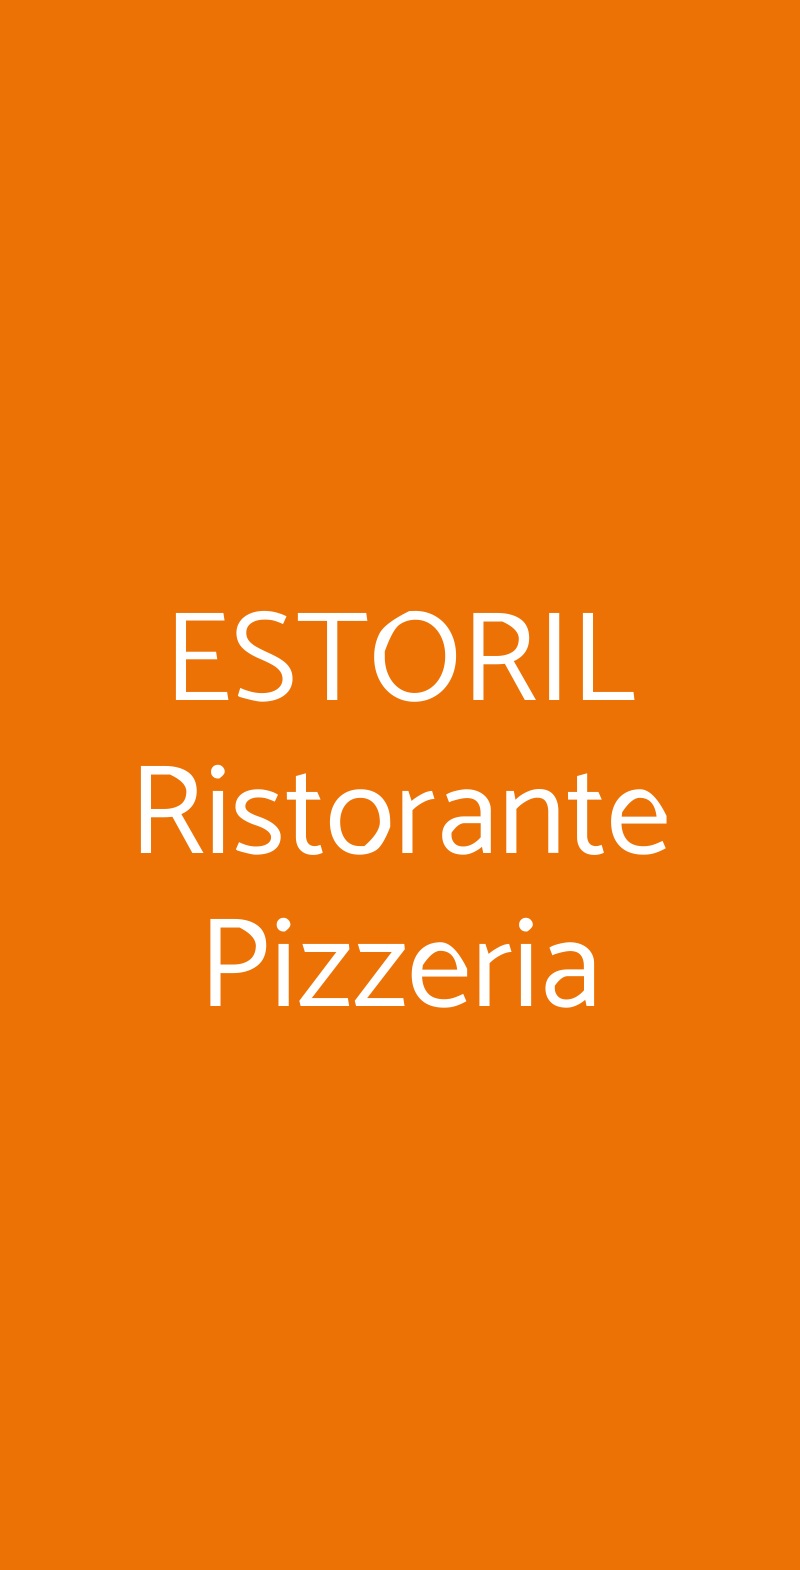 ESTORIL Ristorante Pizzeria Genova menù 1 pagina